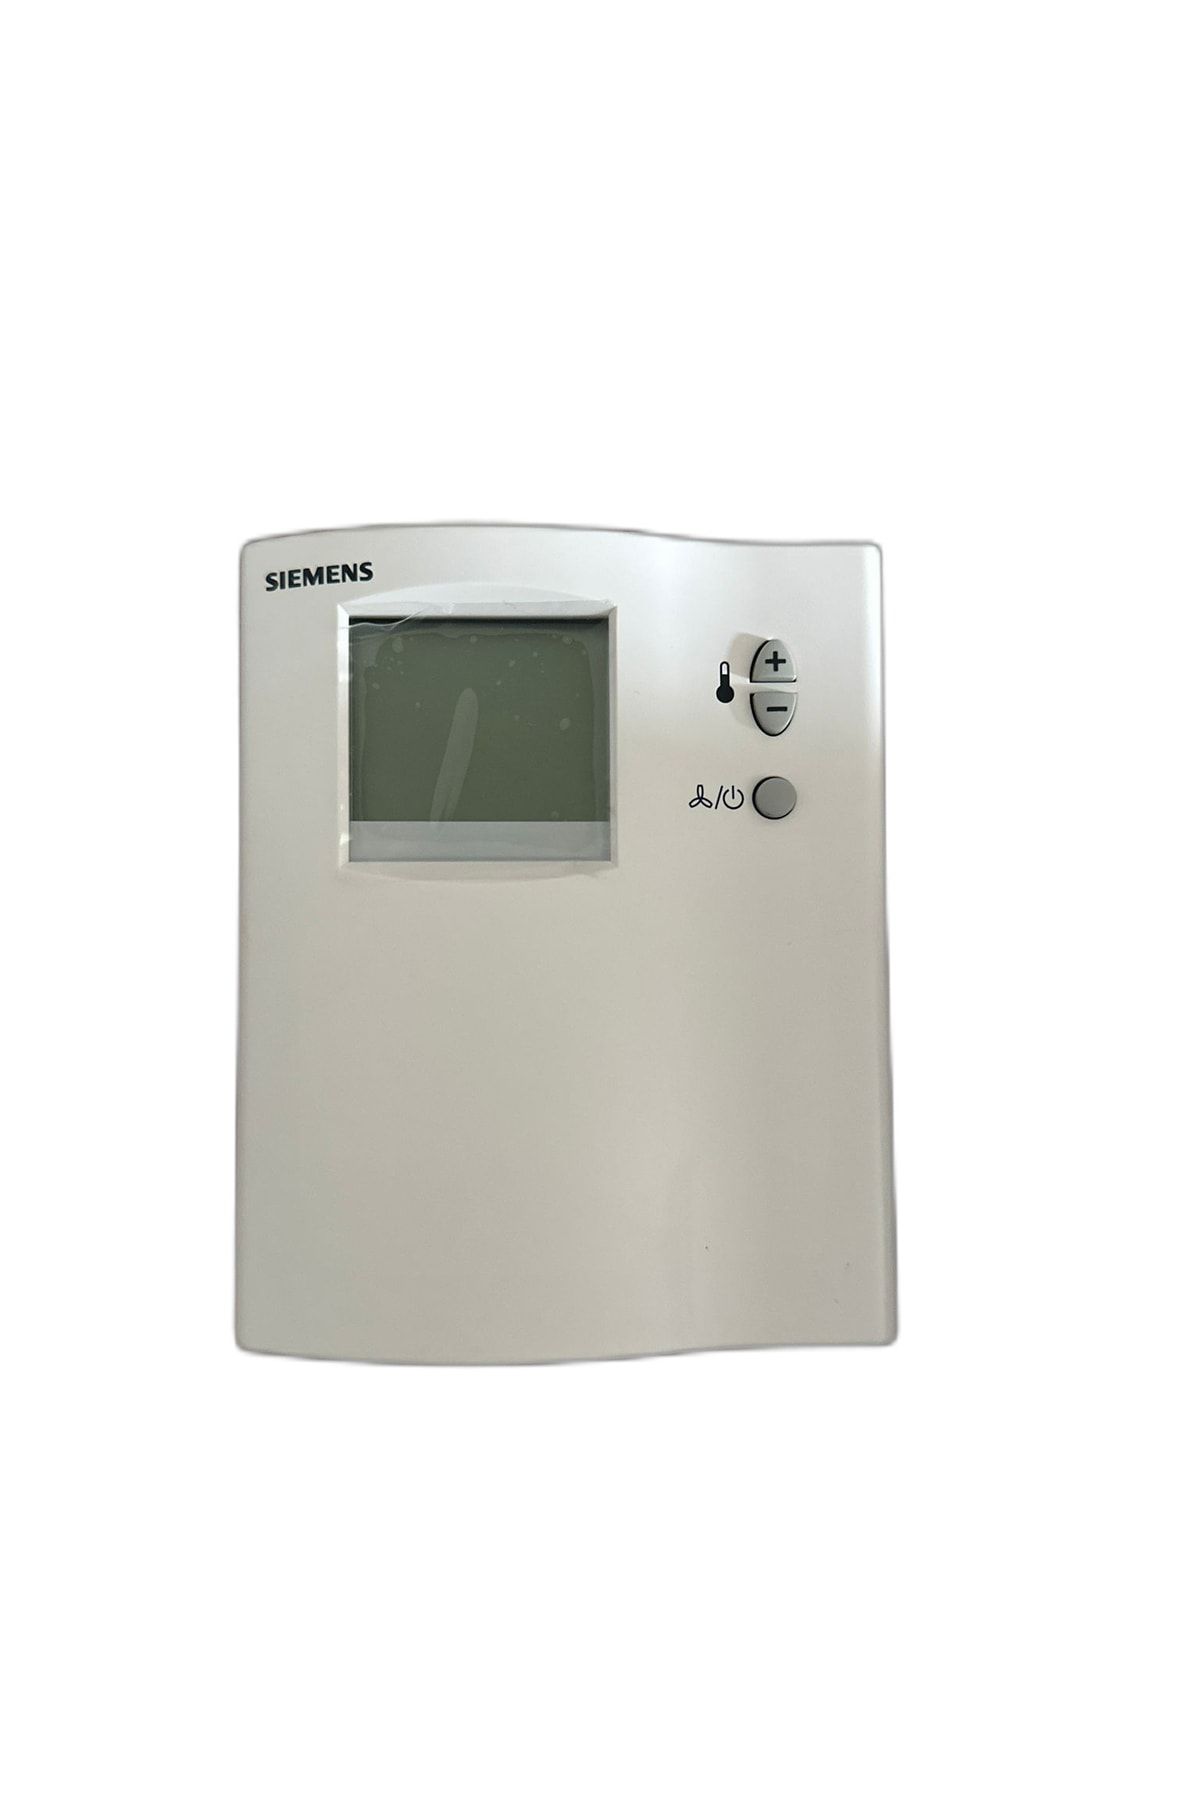 Siemens Rdf110 Thermostat